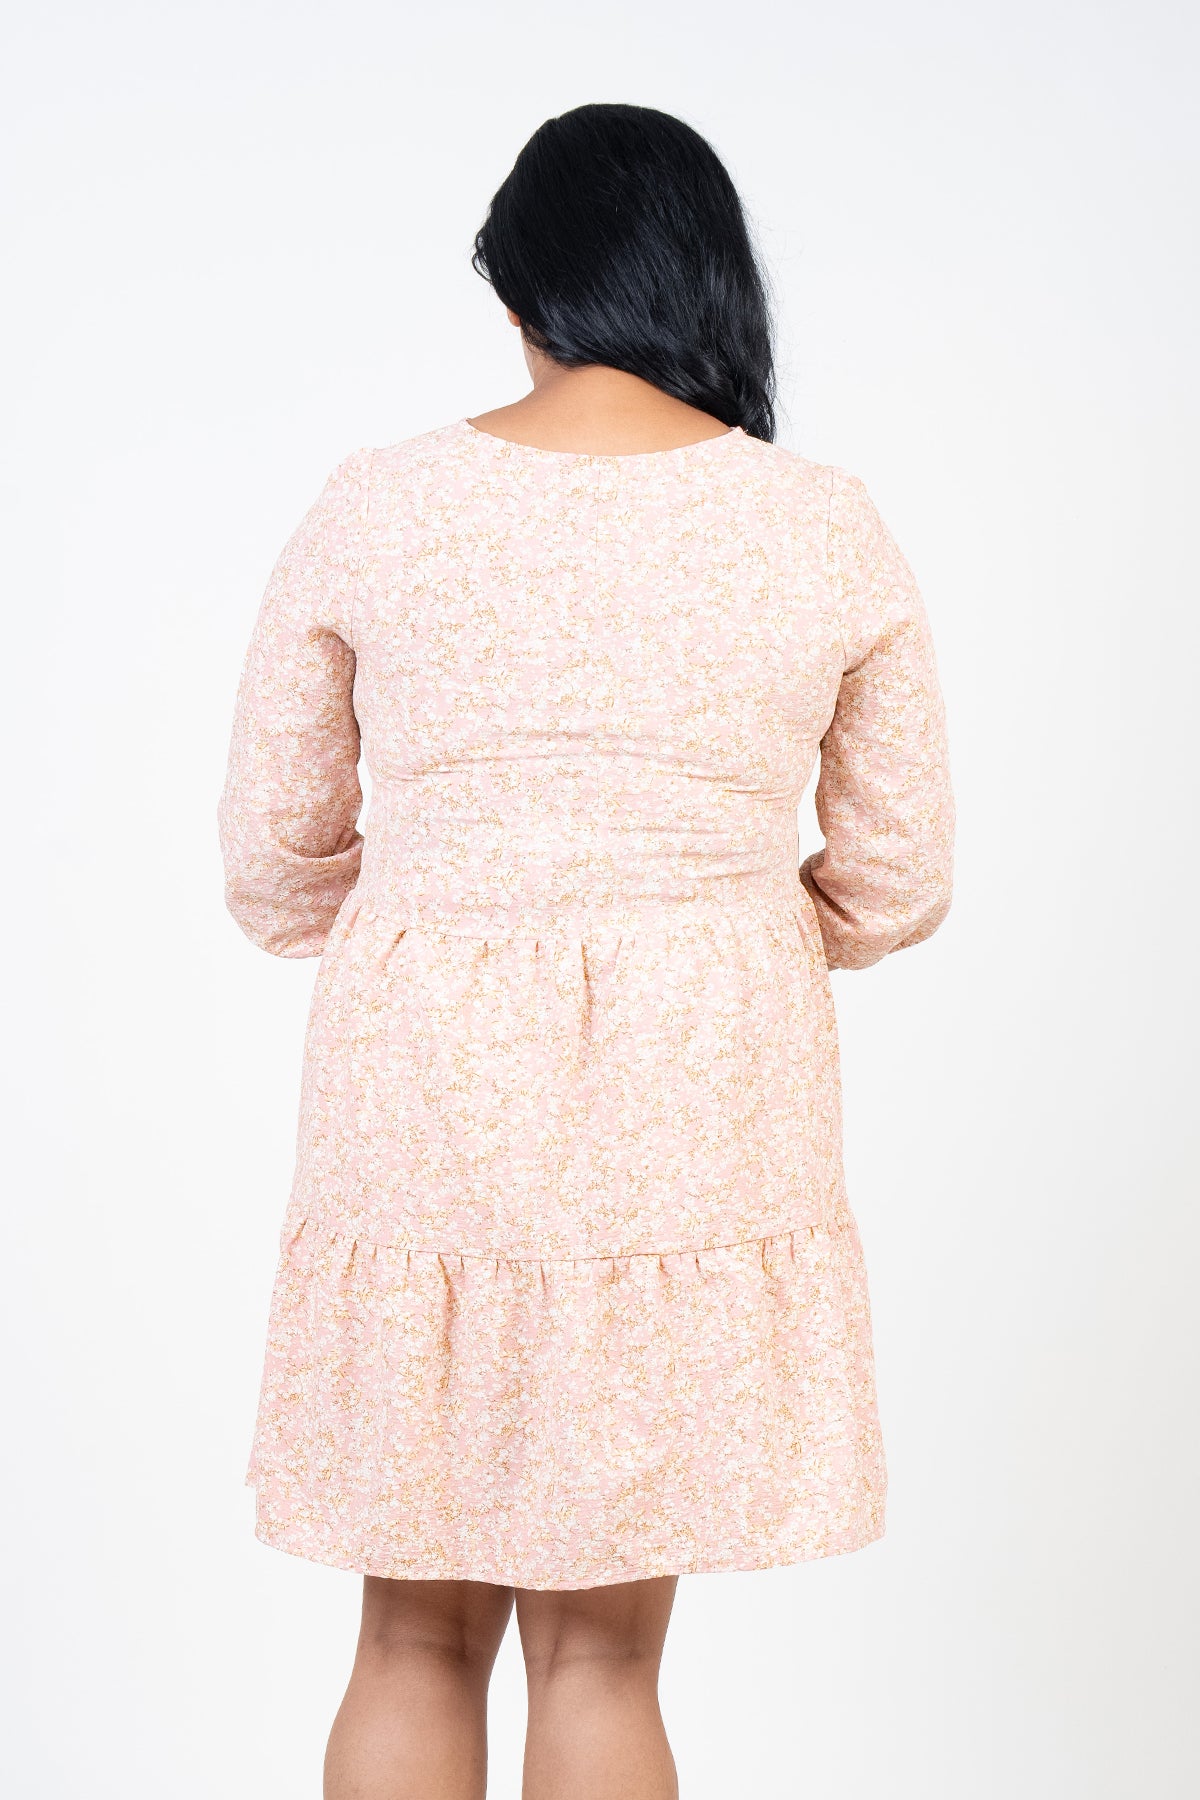 Envogue Women's 3/4 Sleeve Printed Maternity Dress